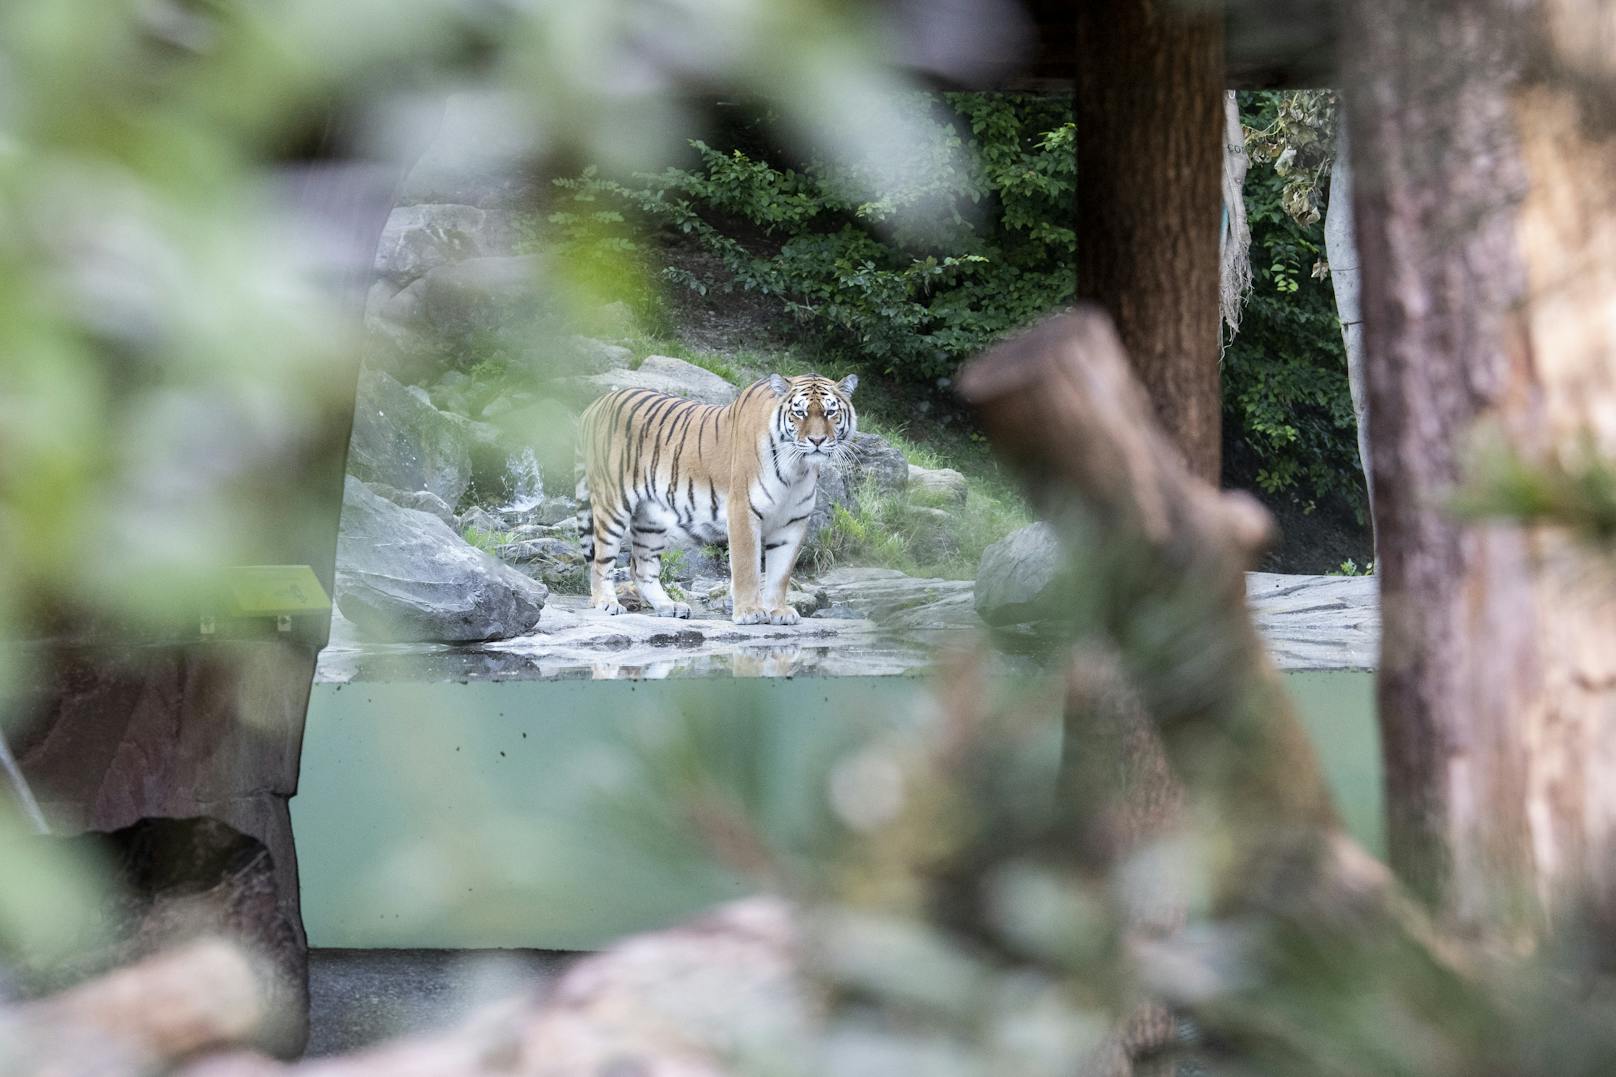 Tiger tötet Pflegerin: "Tier folgte seinem Instinkt"